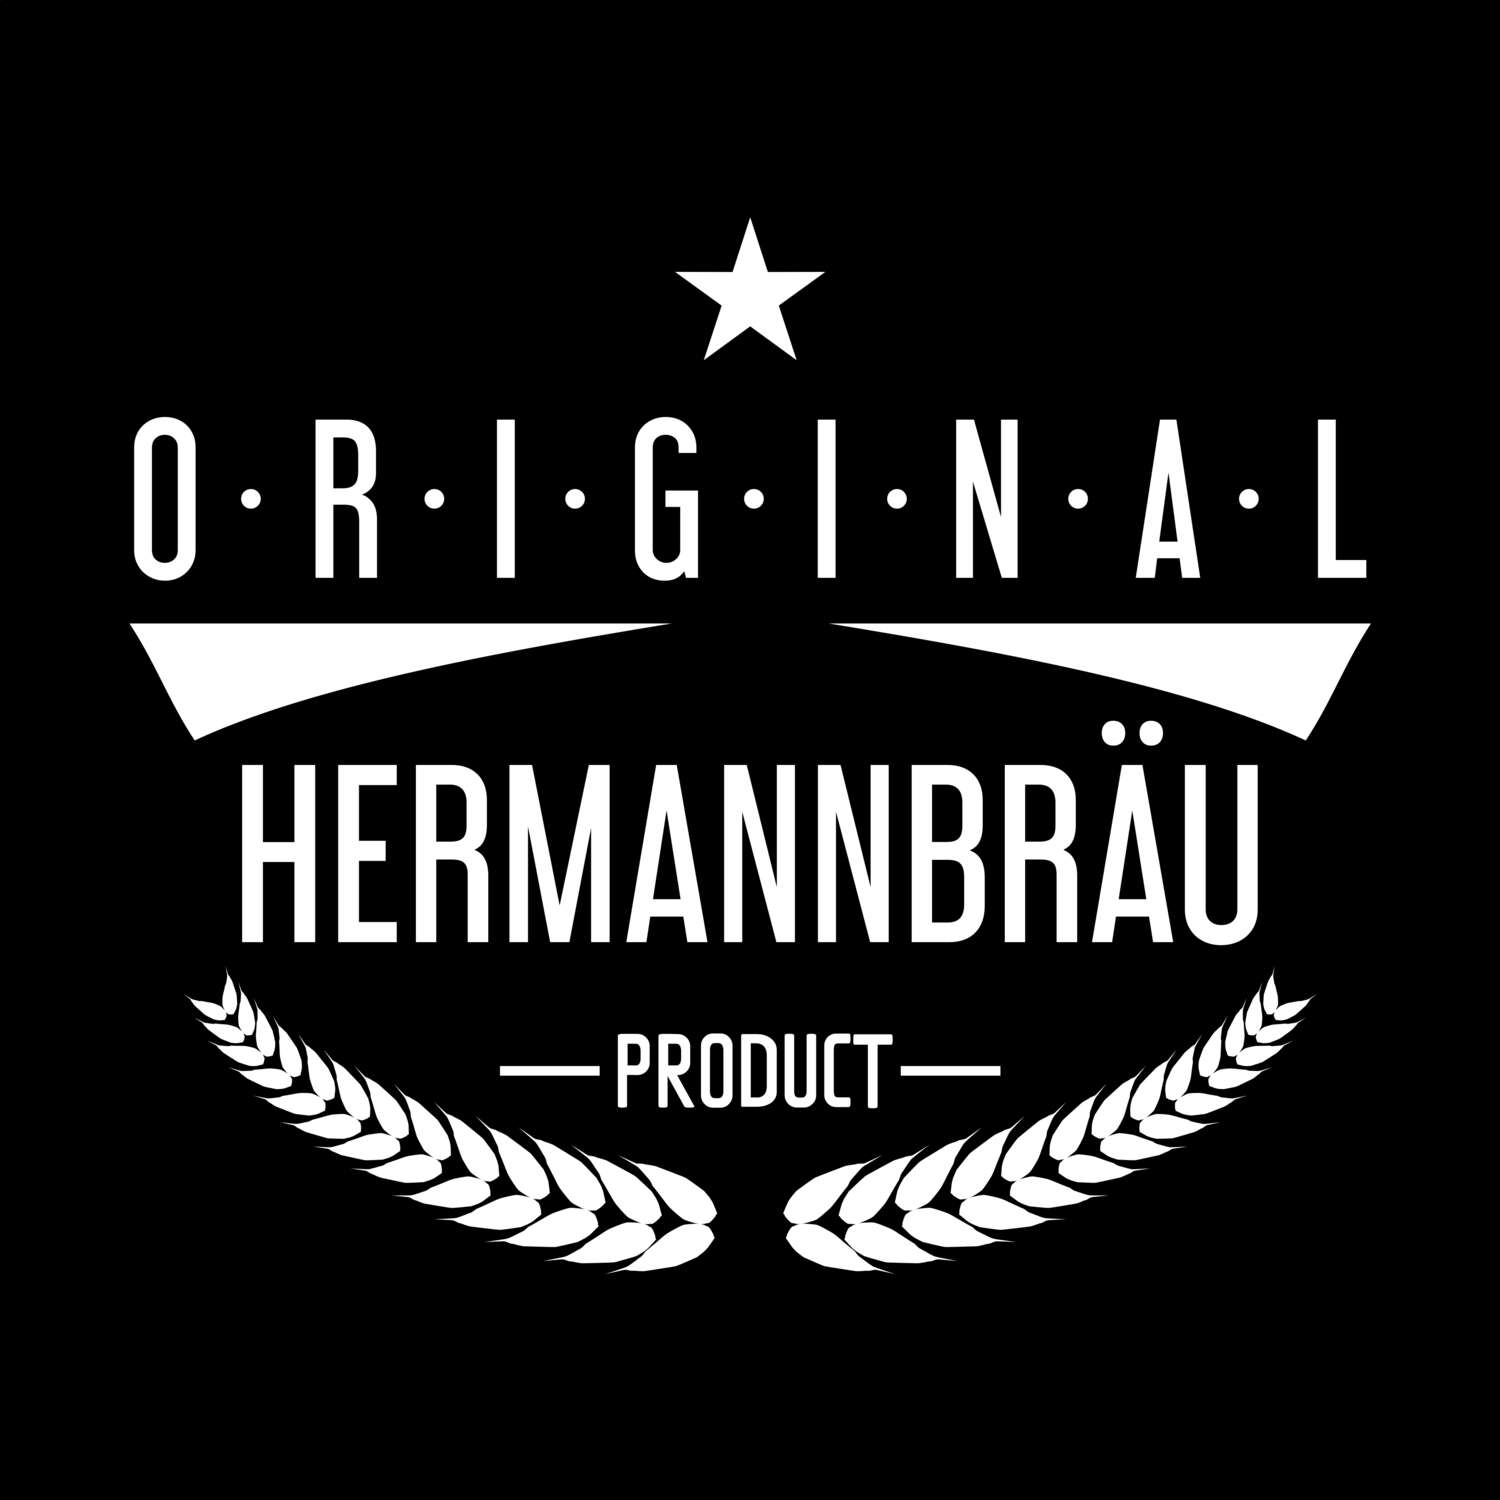 Hermannbräu T-Shirt »Original Product«